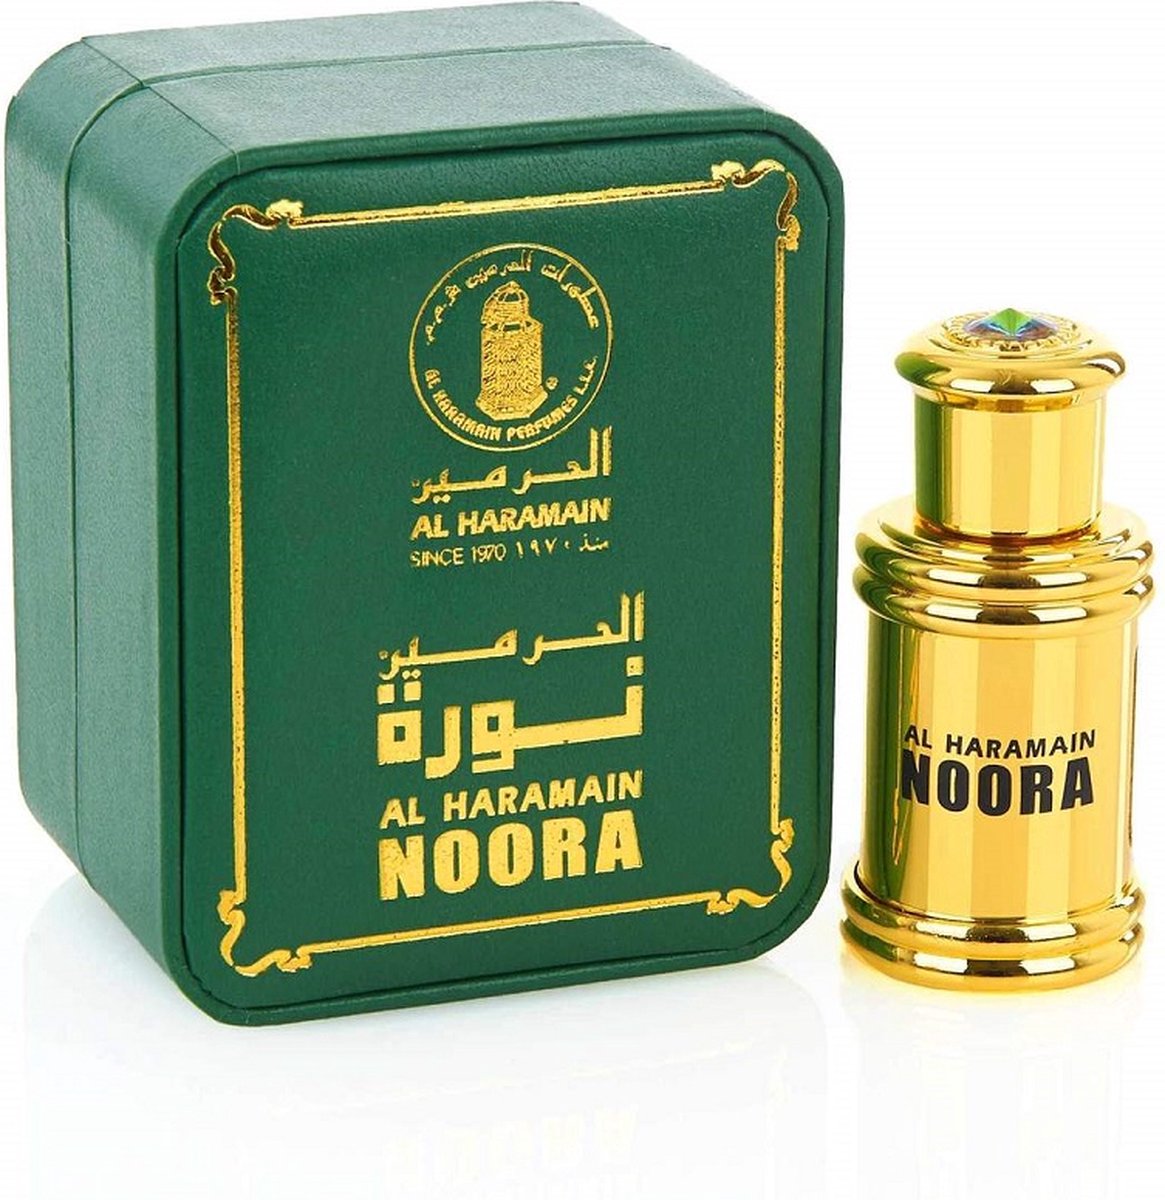 Al Haramain Noora - Perfumed Oil